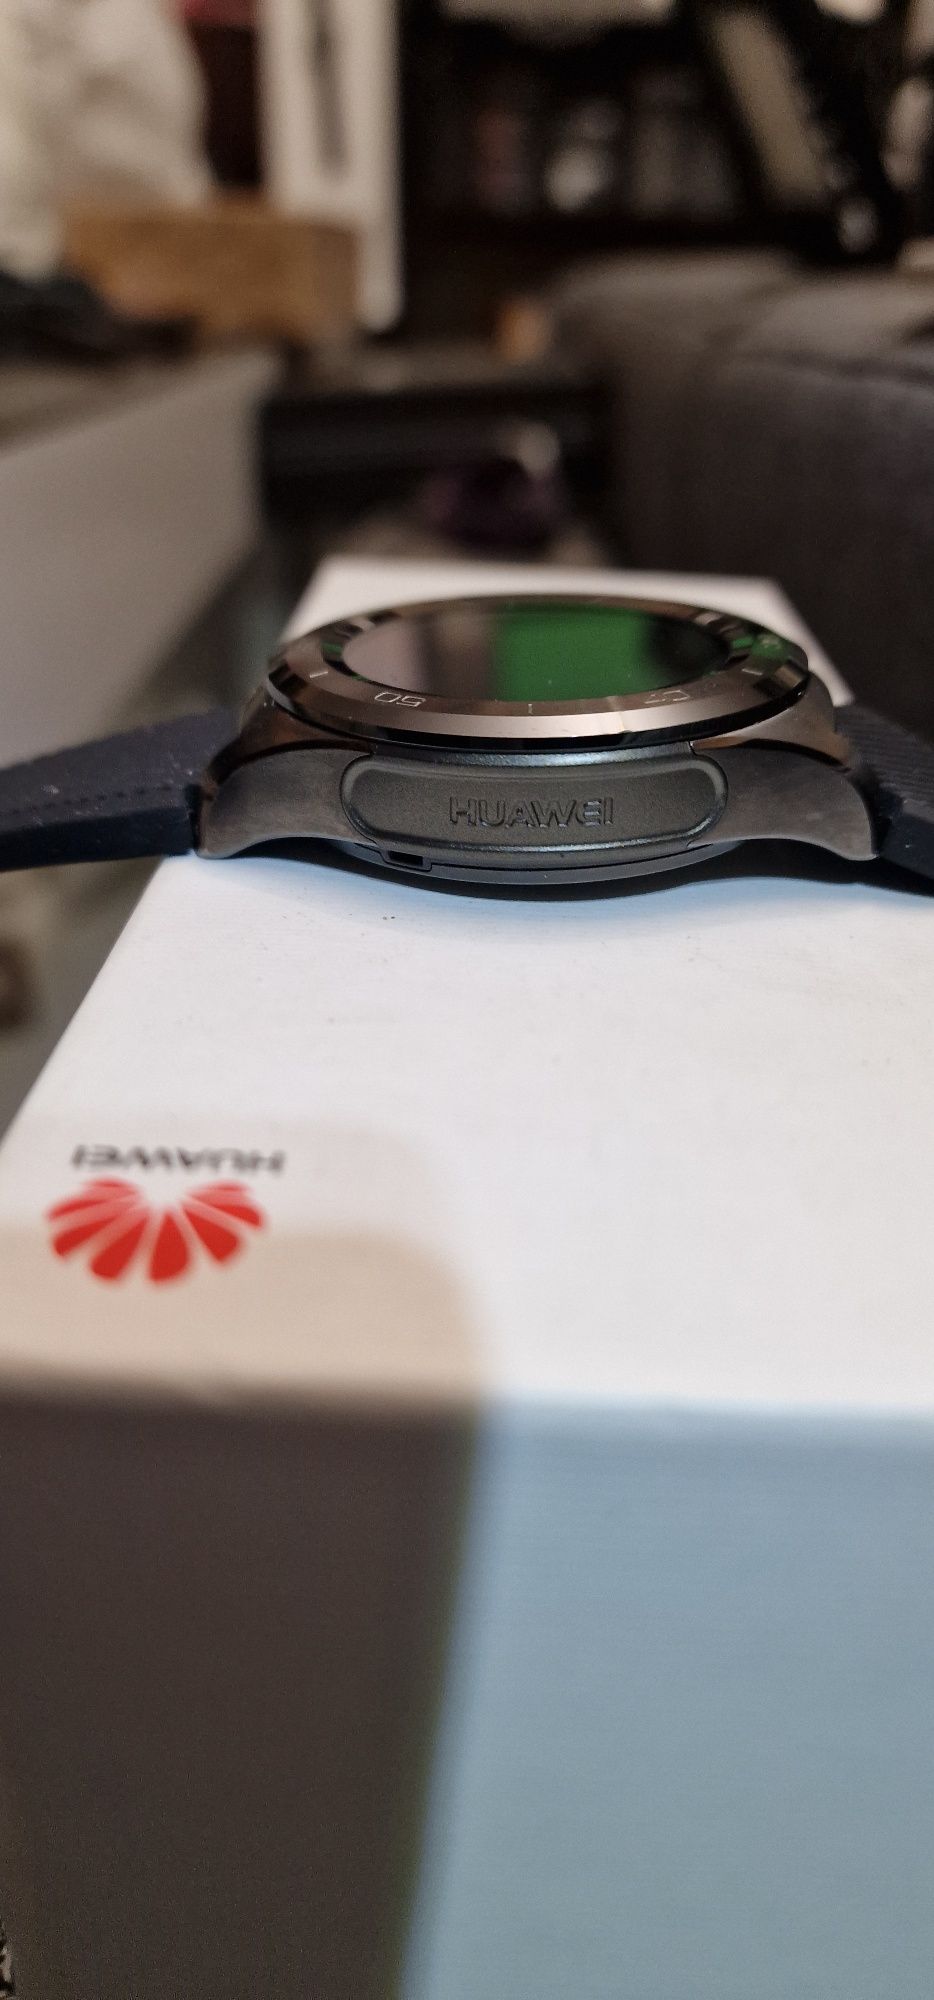 Huawei watch w2 clasik Android Wear bluetooth WiFi nfc